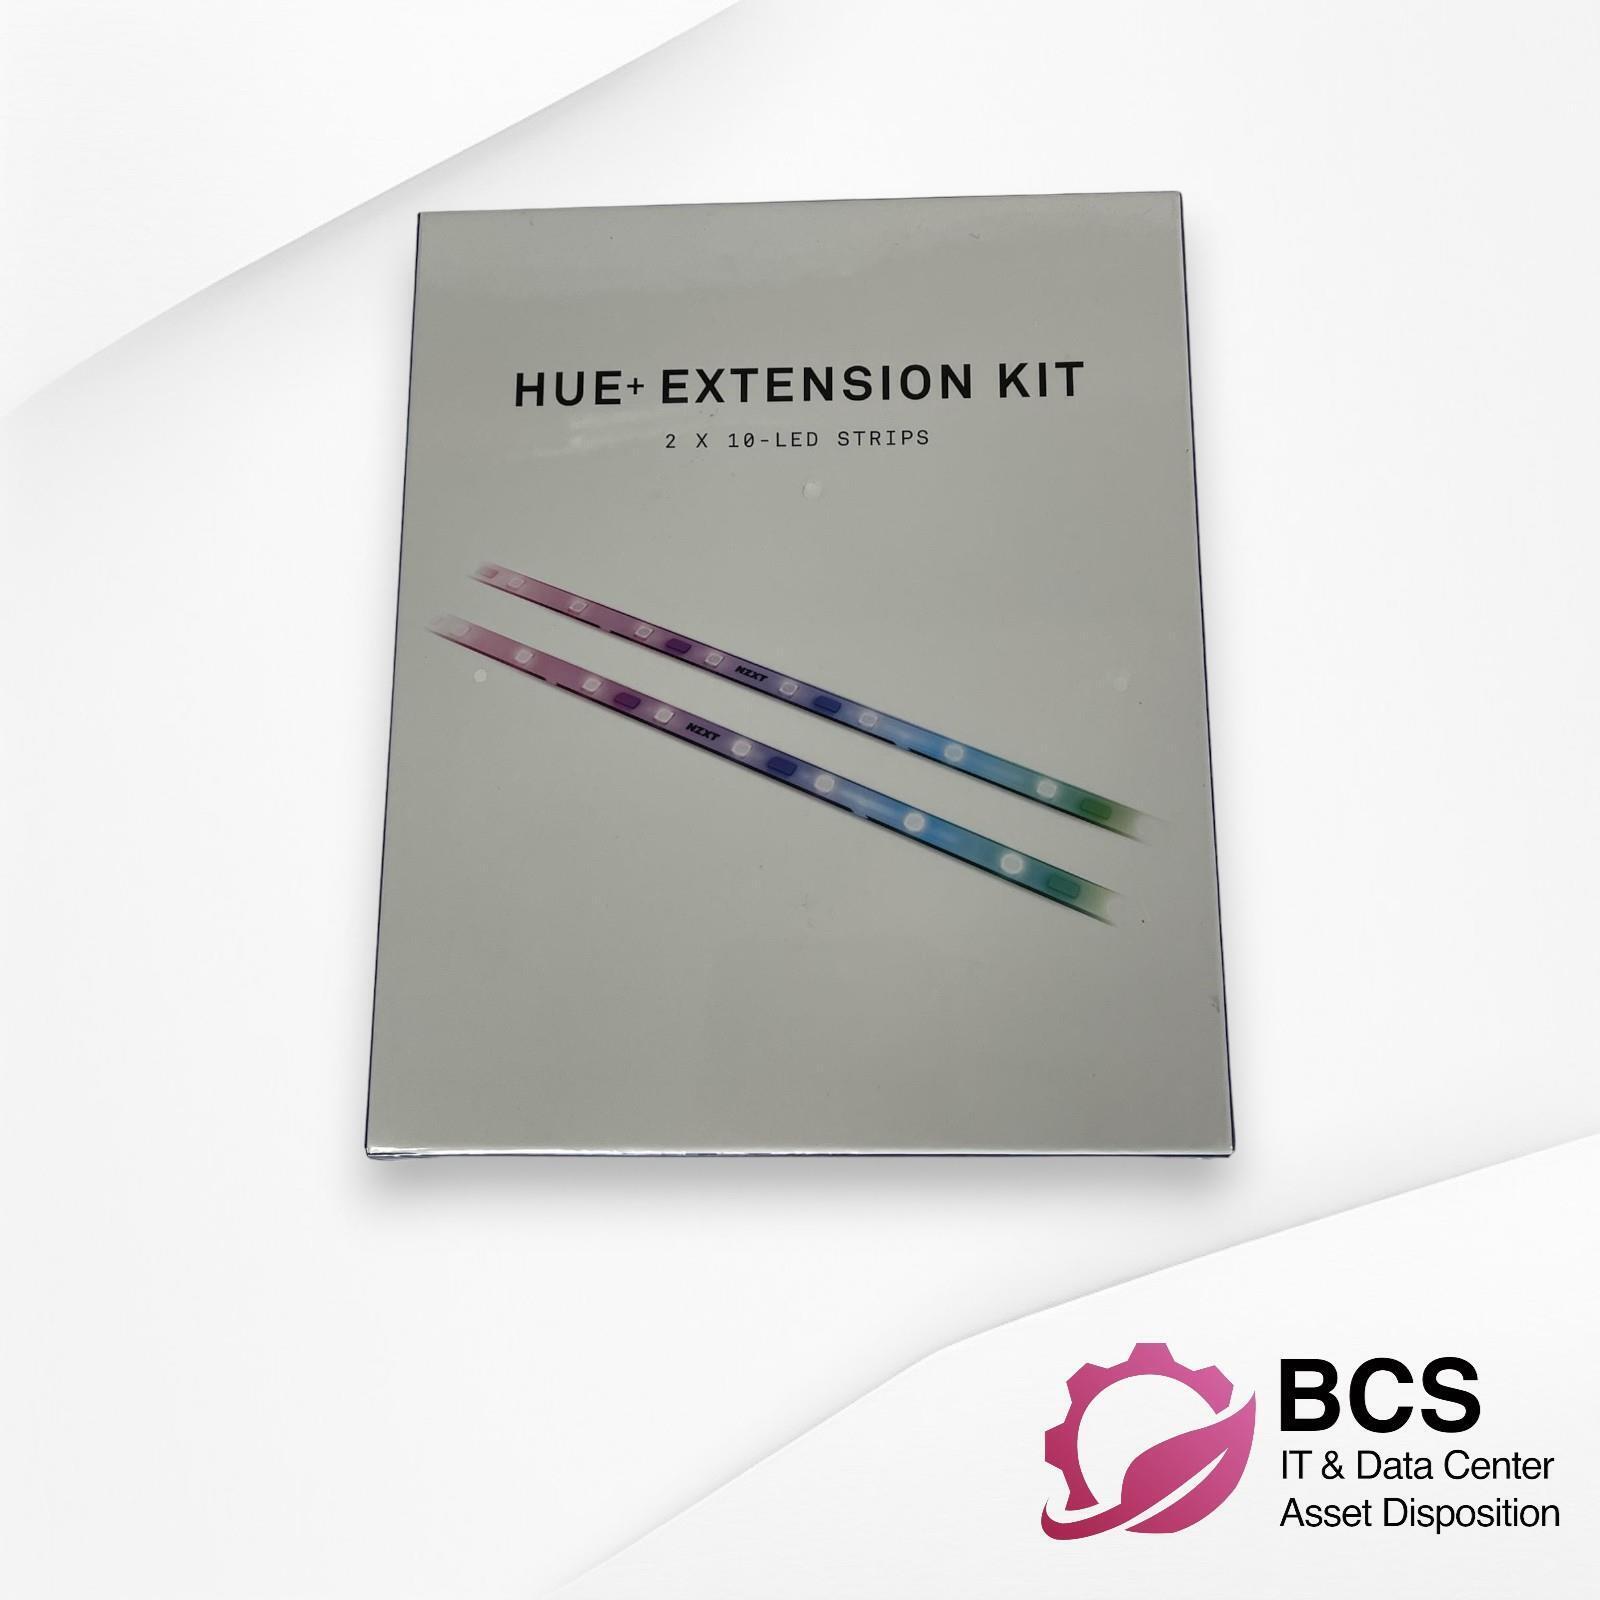 NZXT AC-HPL03-10 HUE+ Extension Kit 2x 10-LED STRIPS